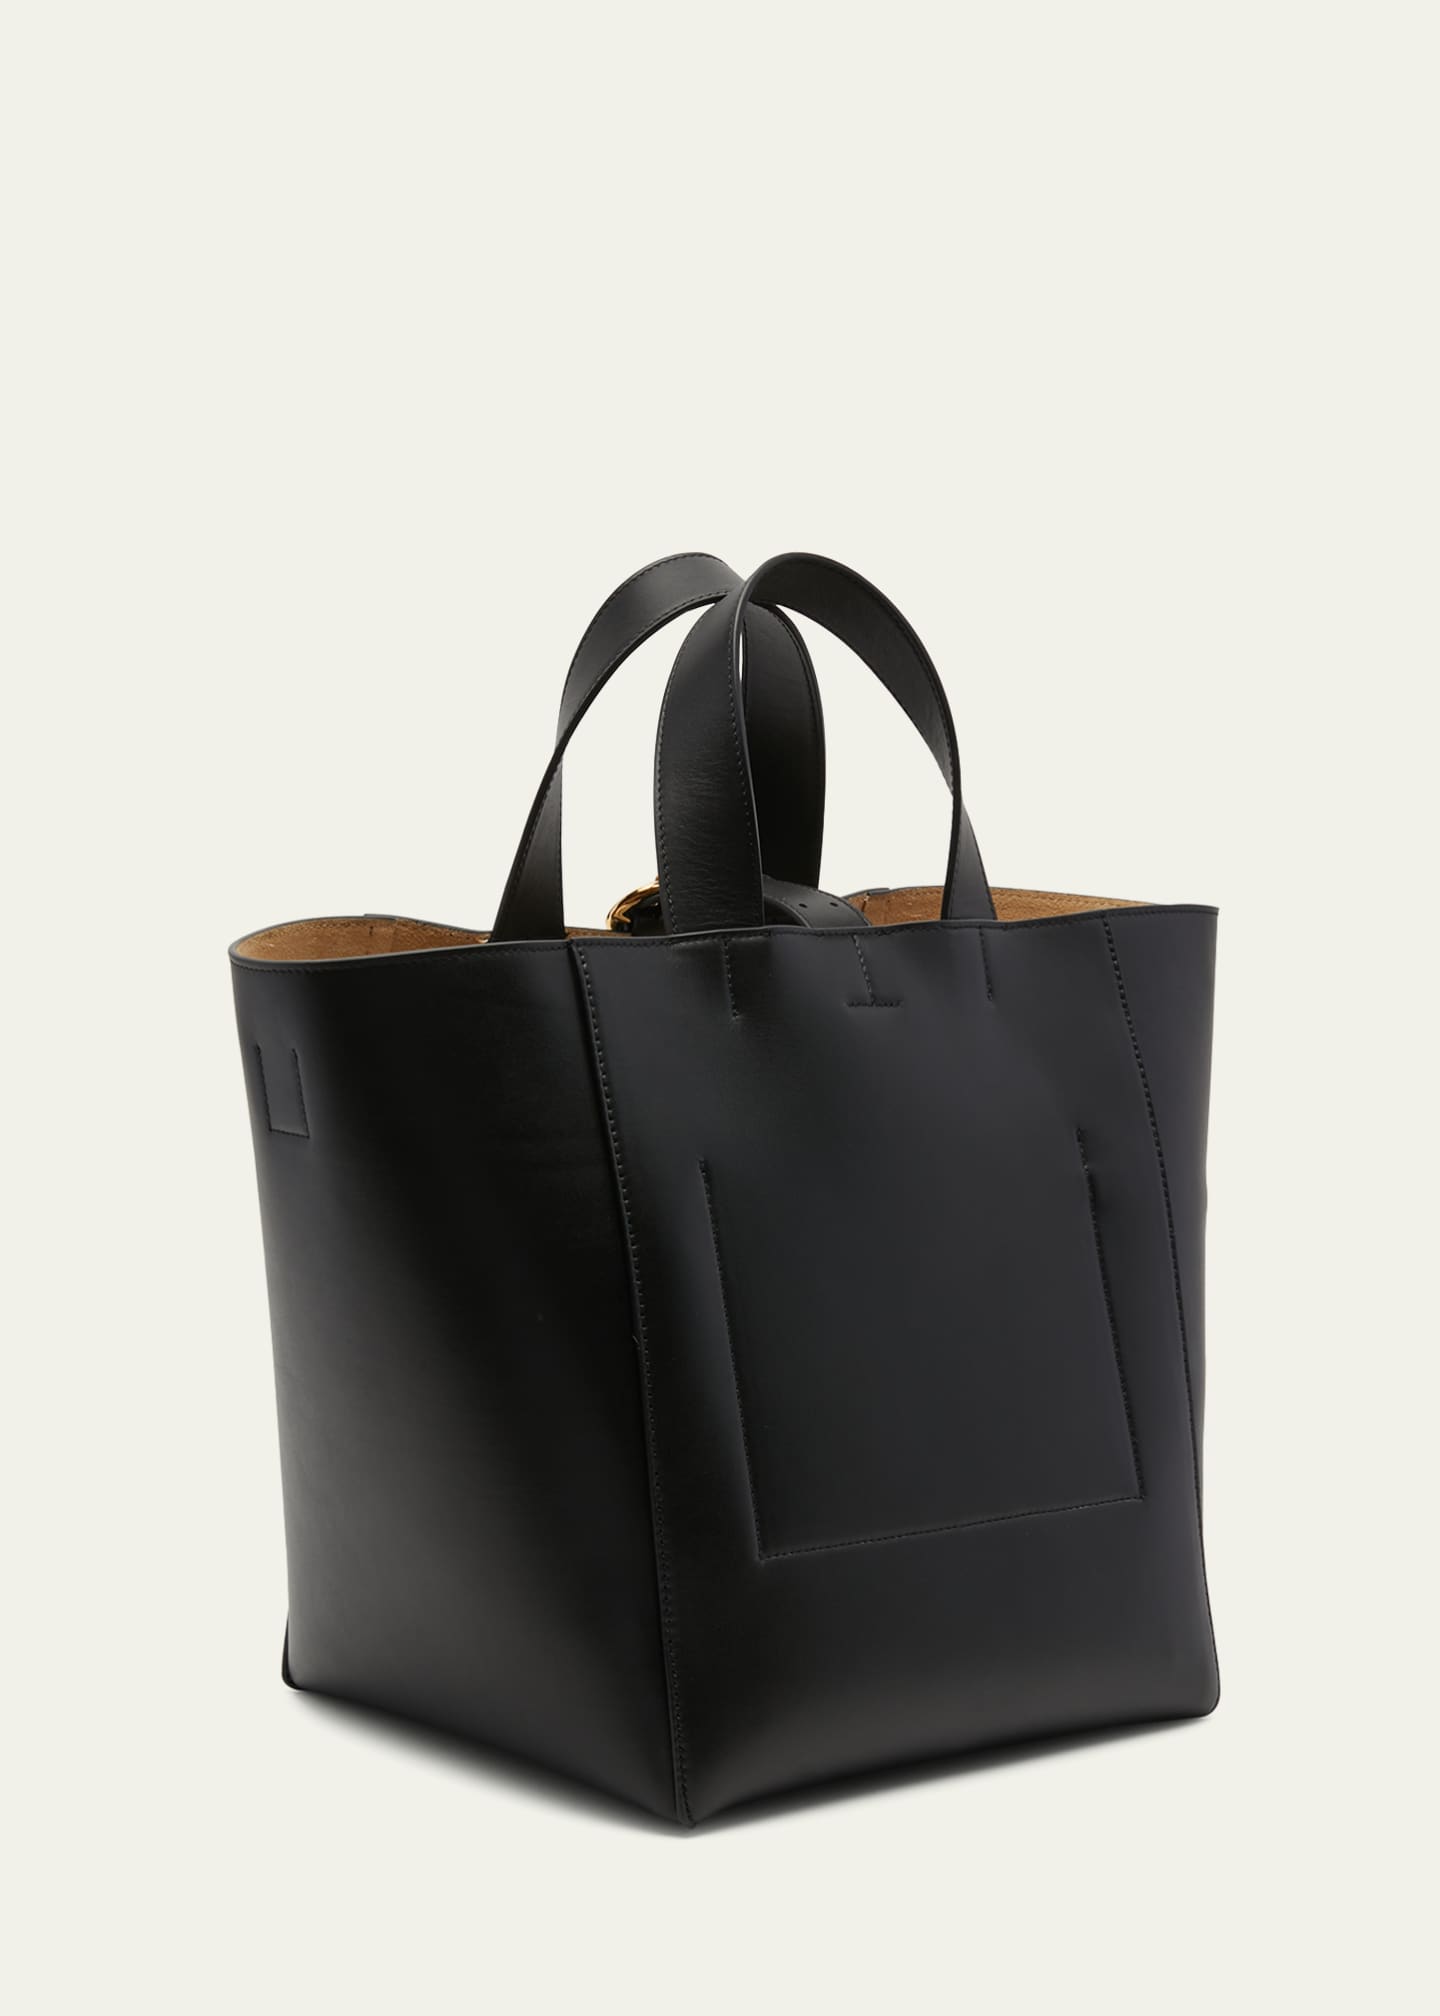 Square bag leather handbag